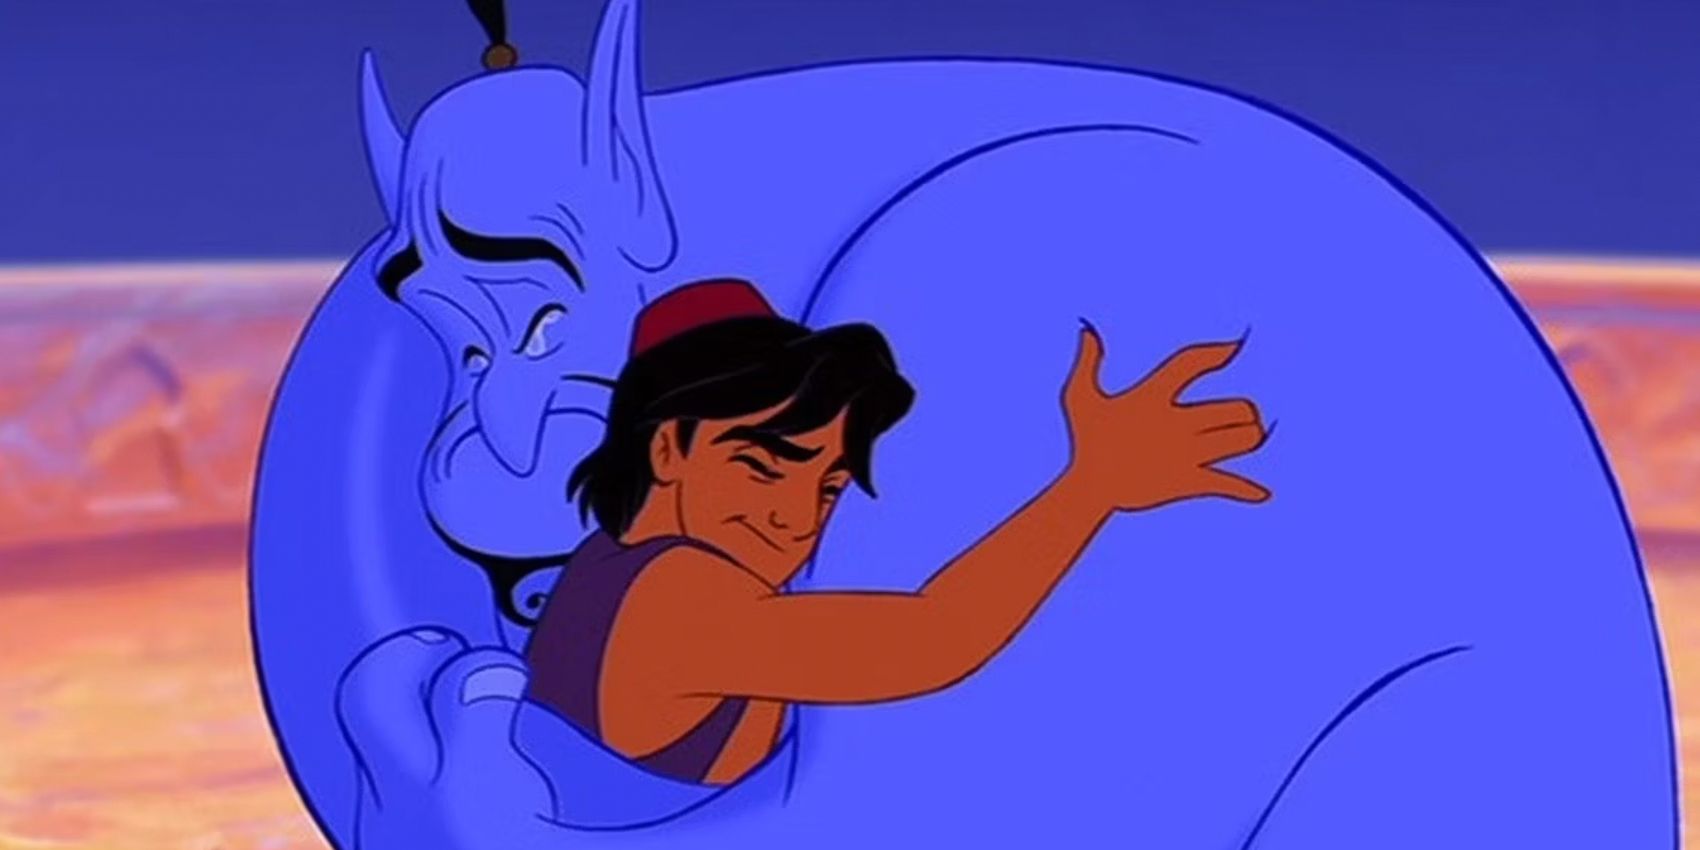 Genie and Aladdin hug in the animated Aladdin